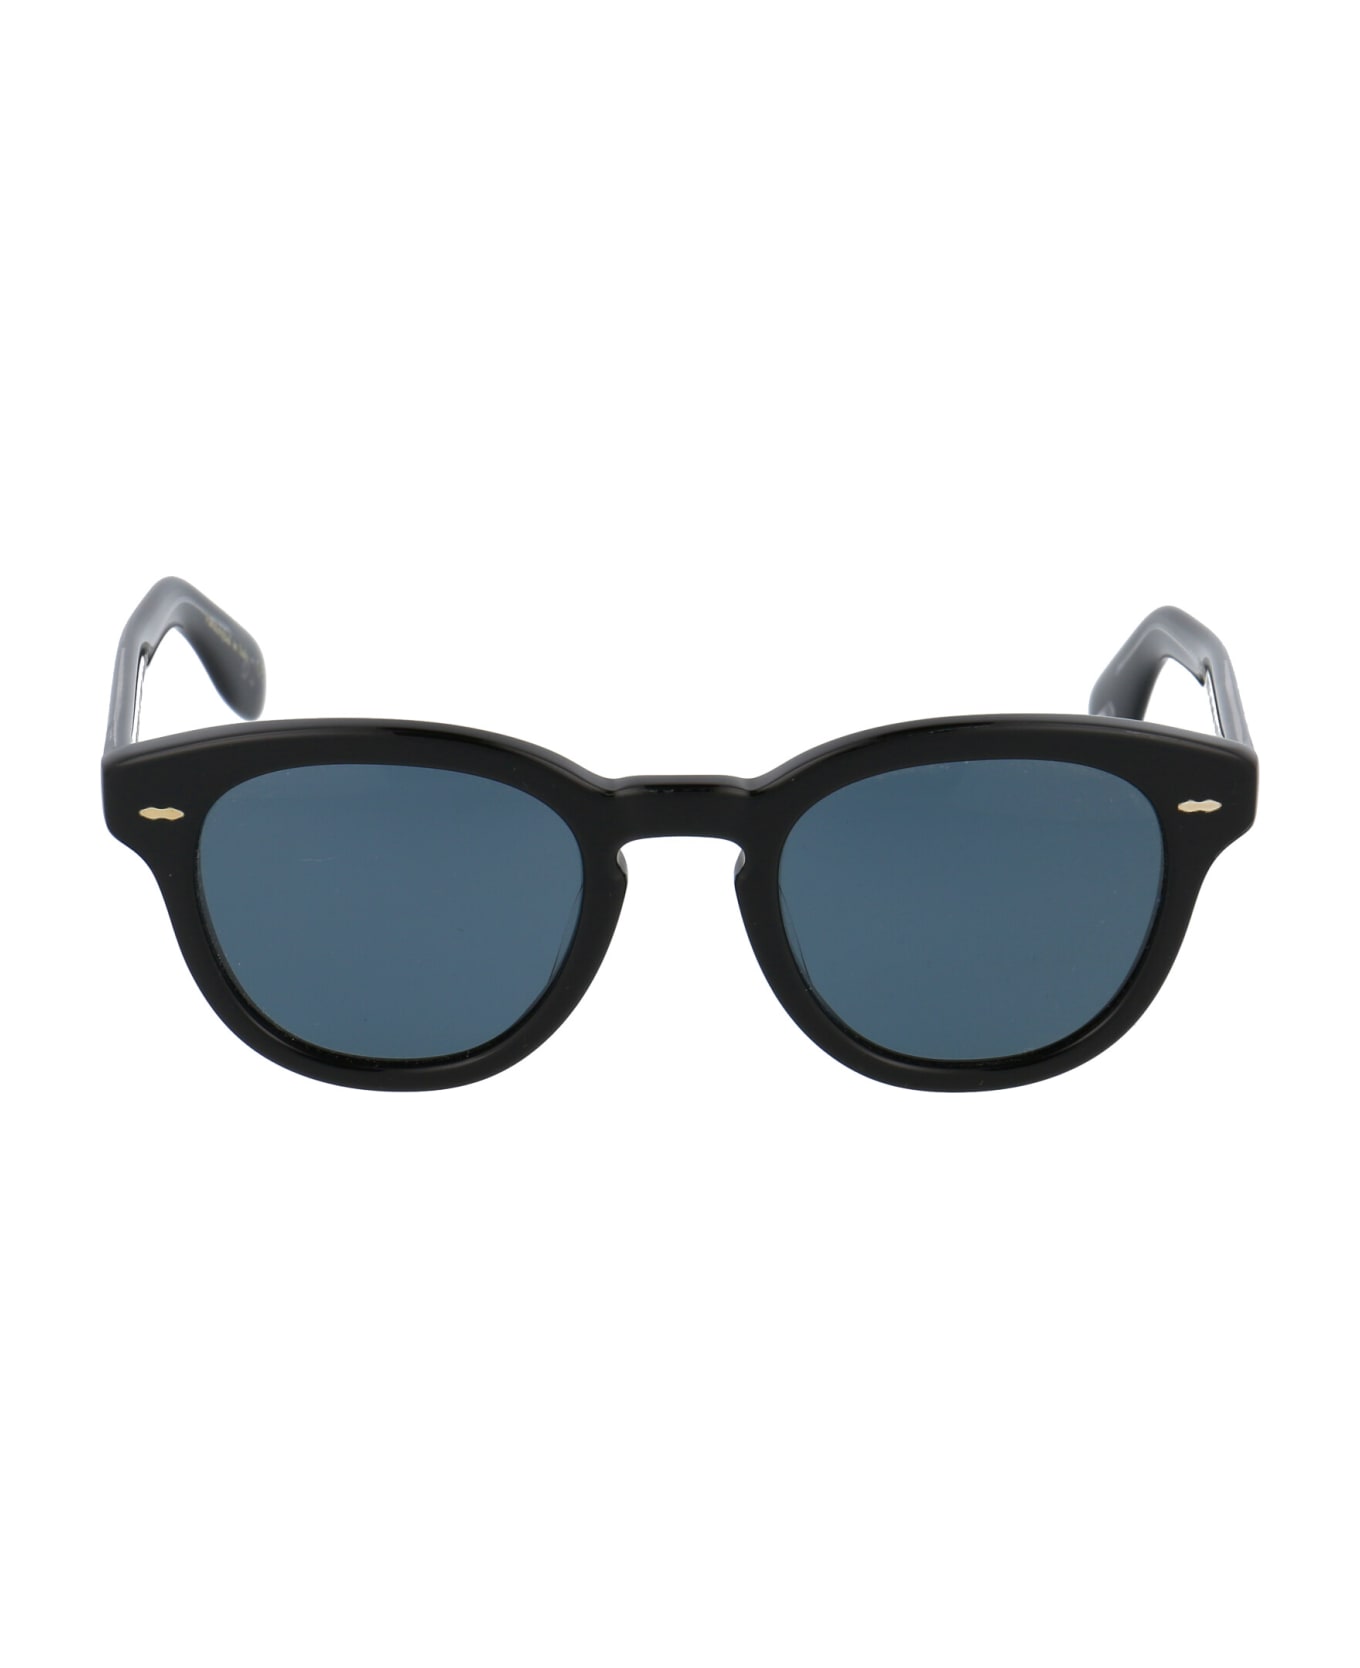 Oliver Peoples Cary Grant Sun Sunglasses - 14923R BLACK サングラス